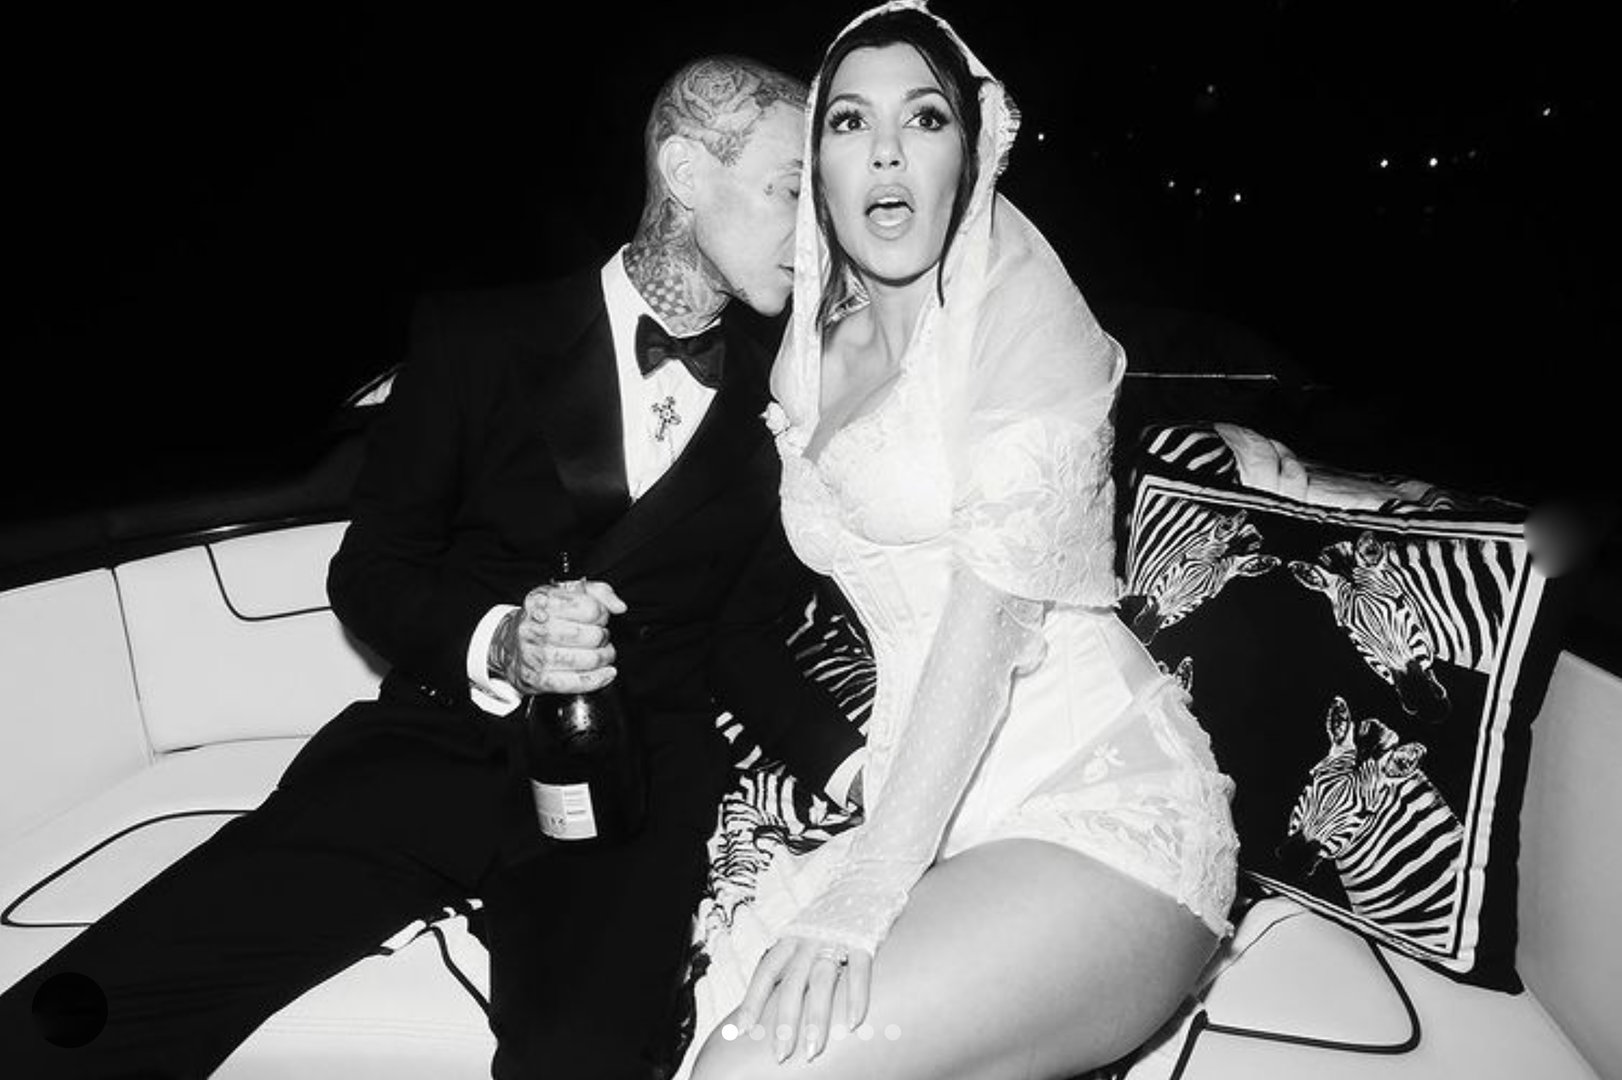 kourtney kardashian's luxury wedding black and white photo with travis barker